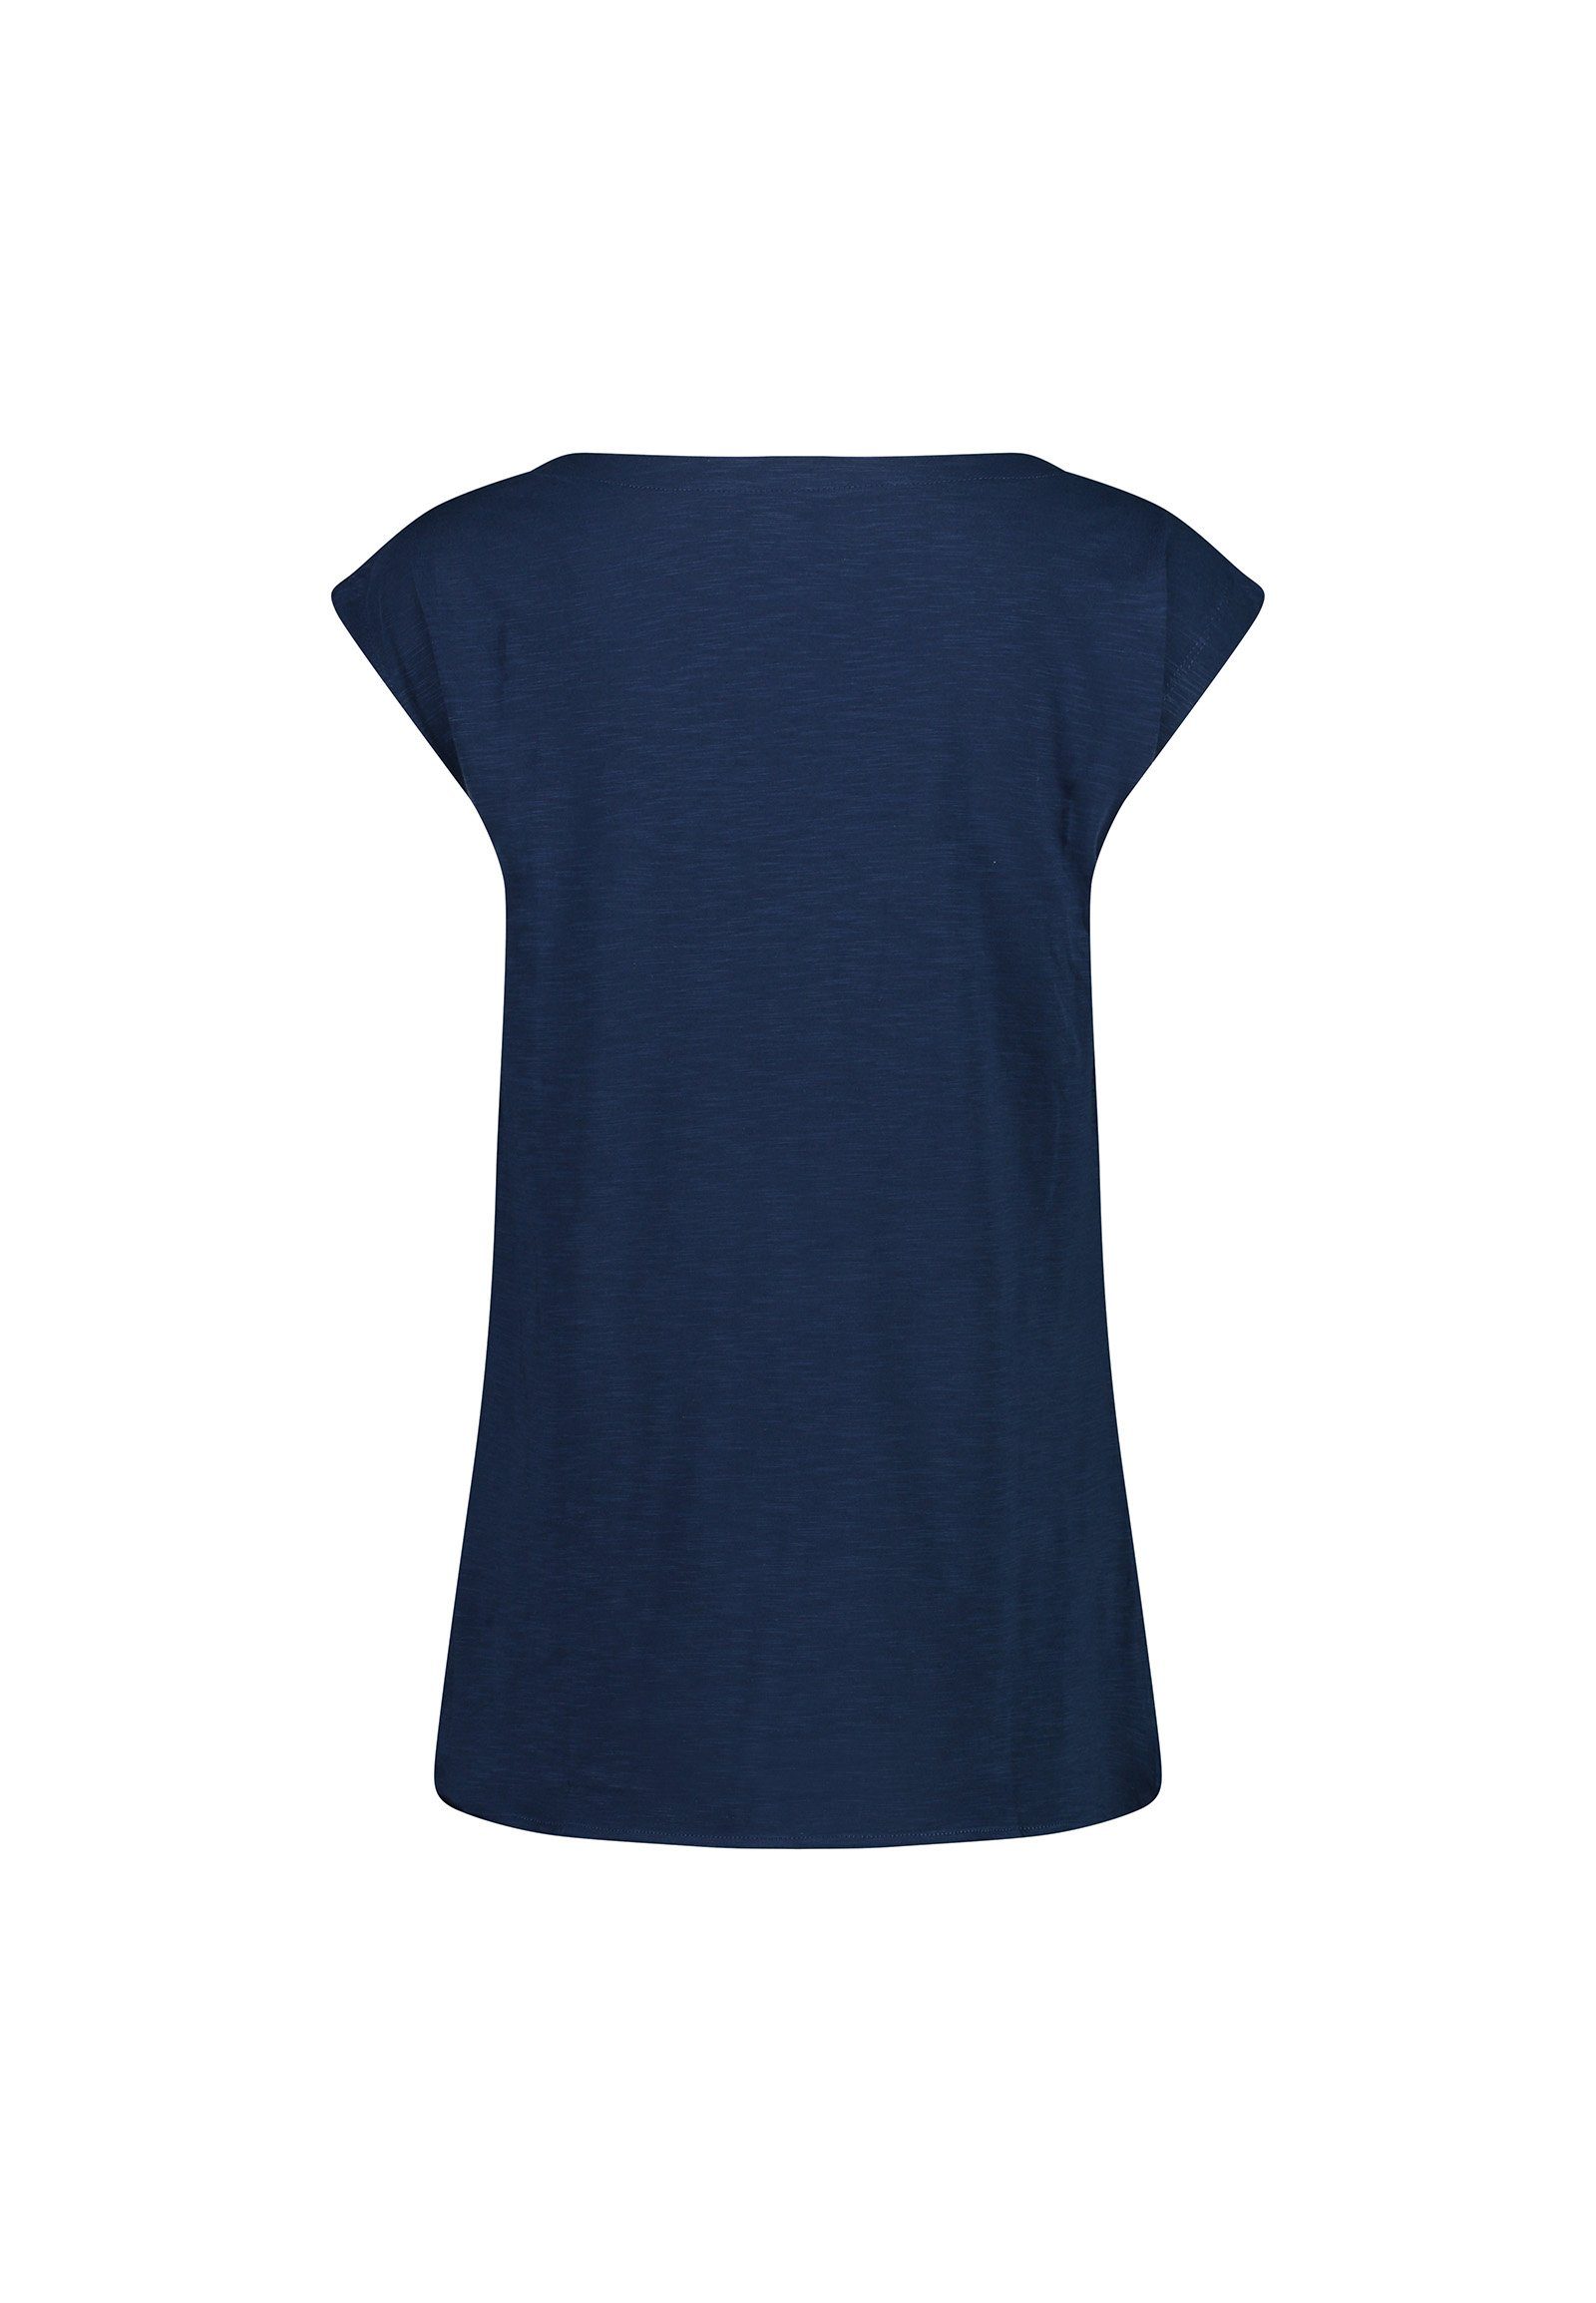 CMP aus CMP dunkelblau 100% 32D8 Bio-Baumwolle Damen Maxi-T-Shirt Laufshirt